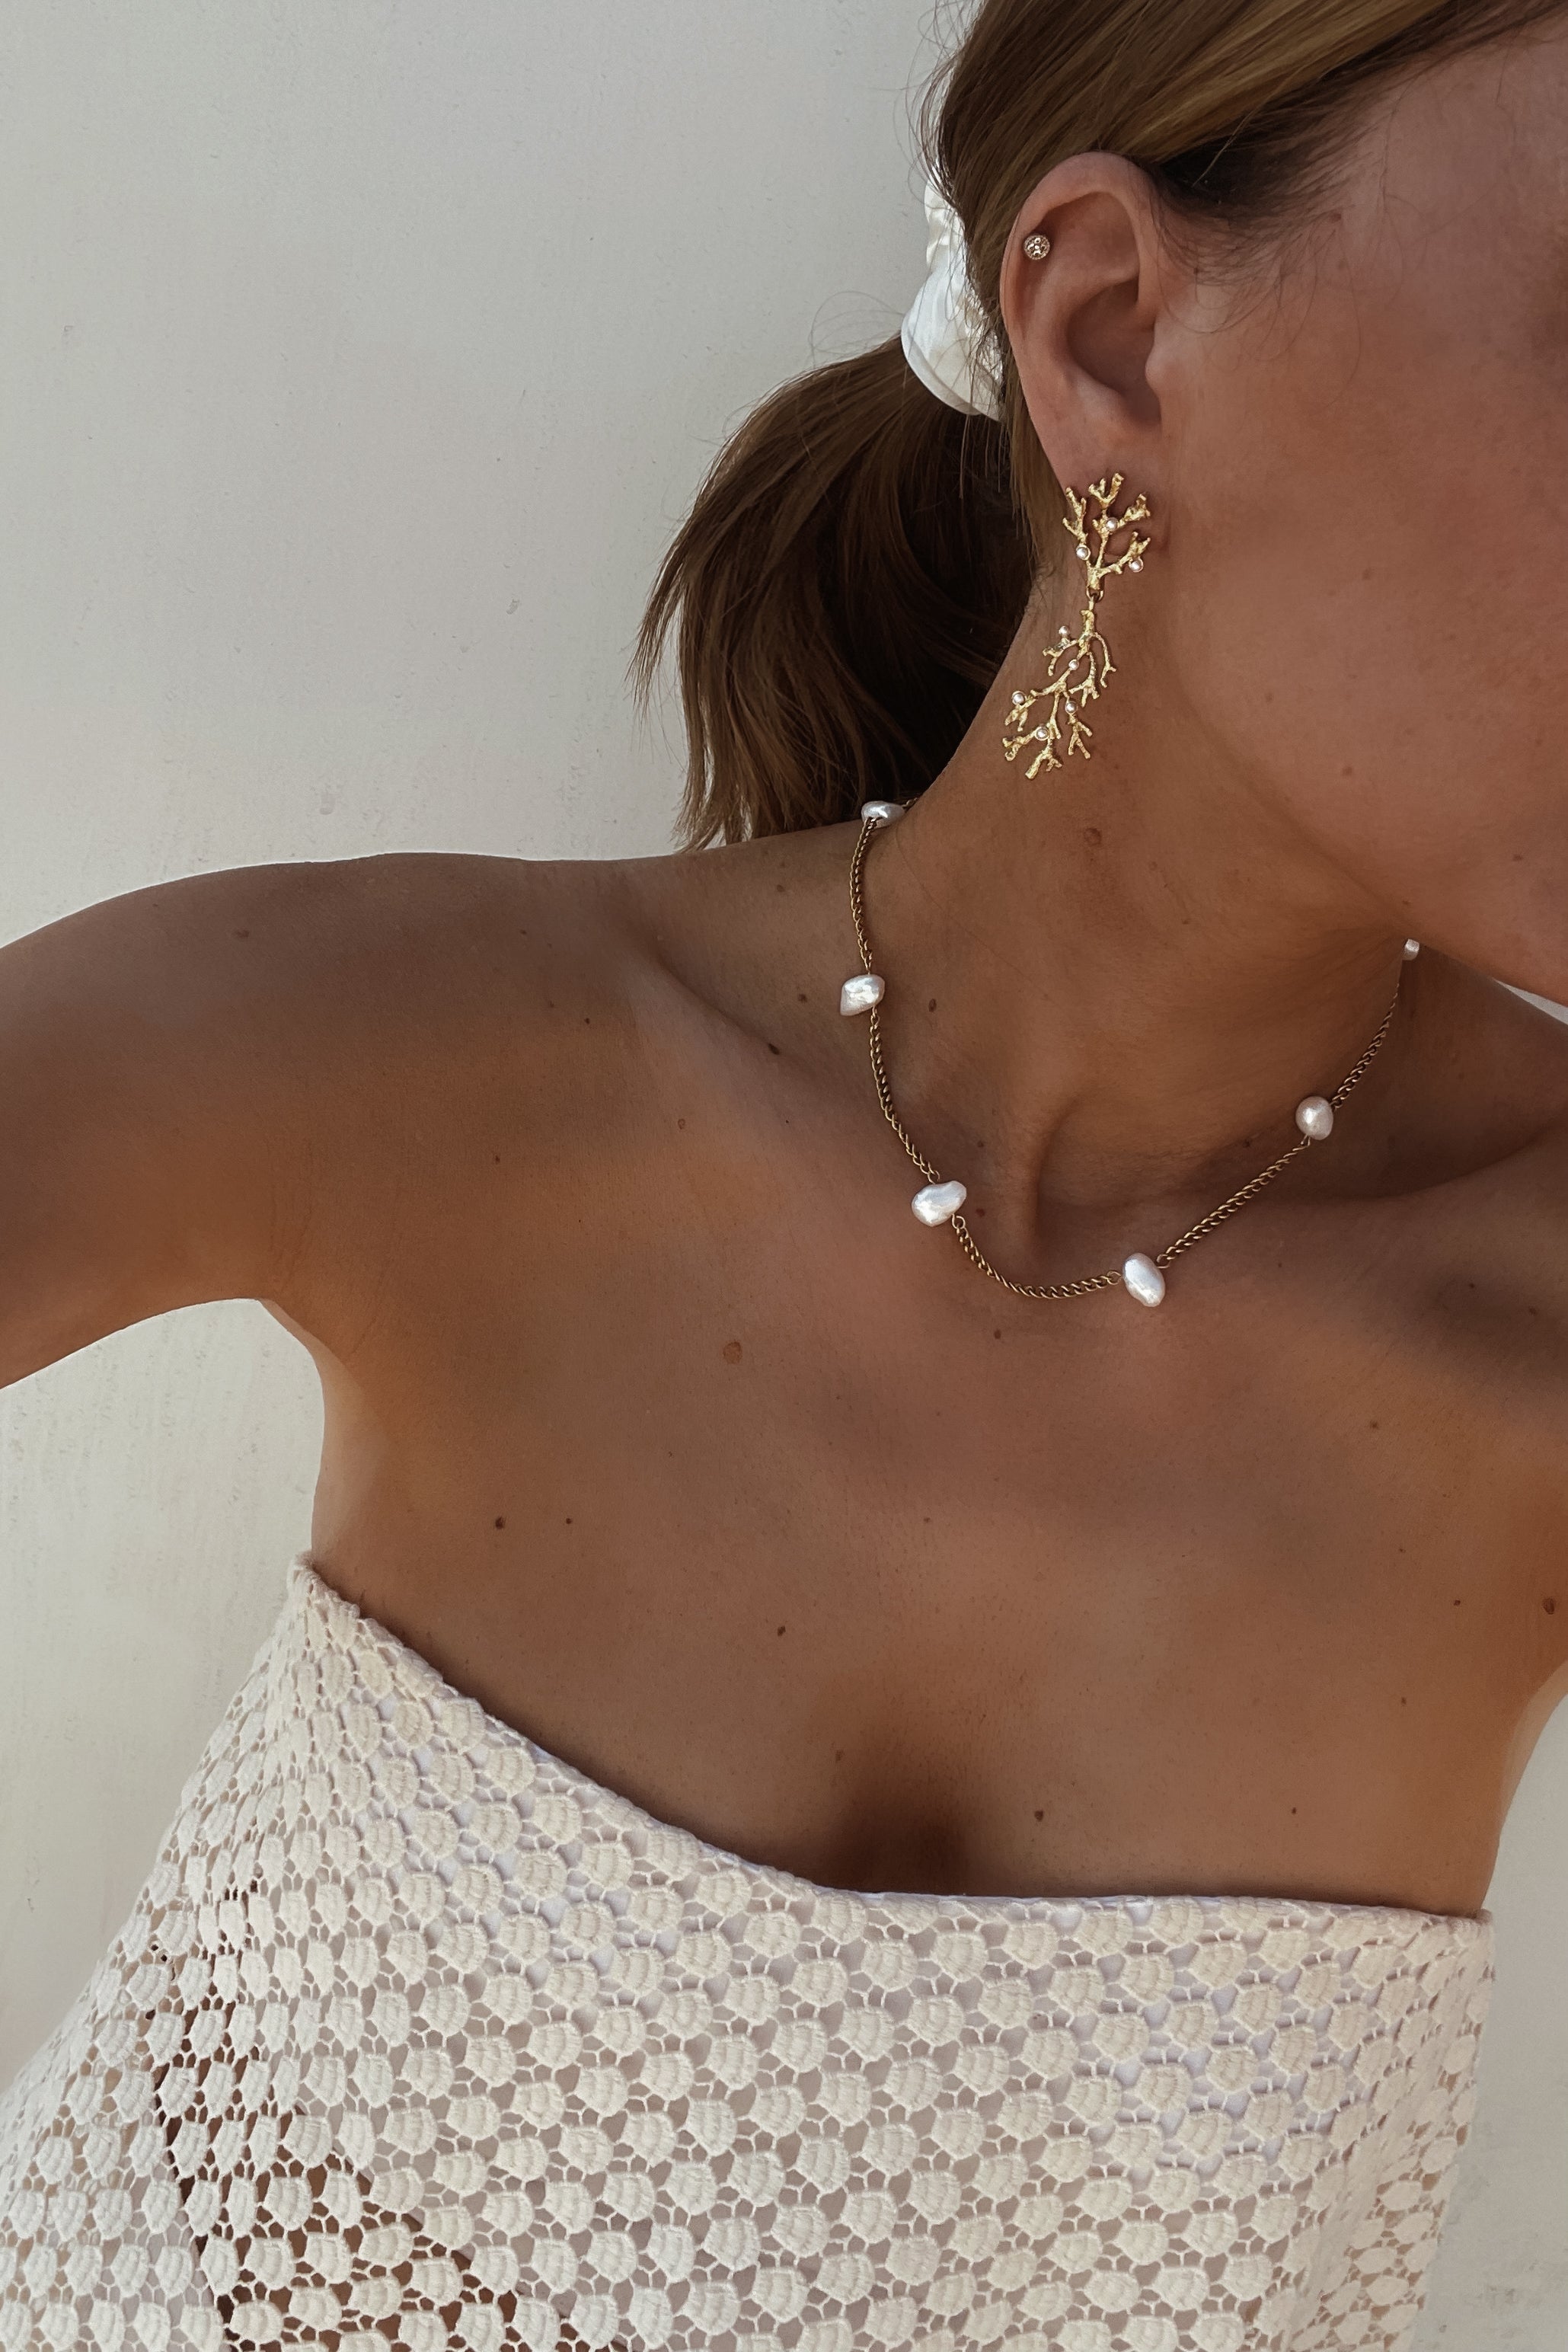 Xabrina Earrings - Boutique Minimaliste has waterproof, durable, elegant and vintage inspired jewelry